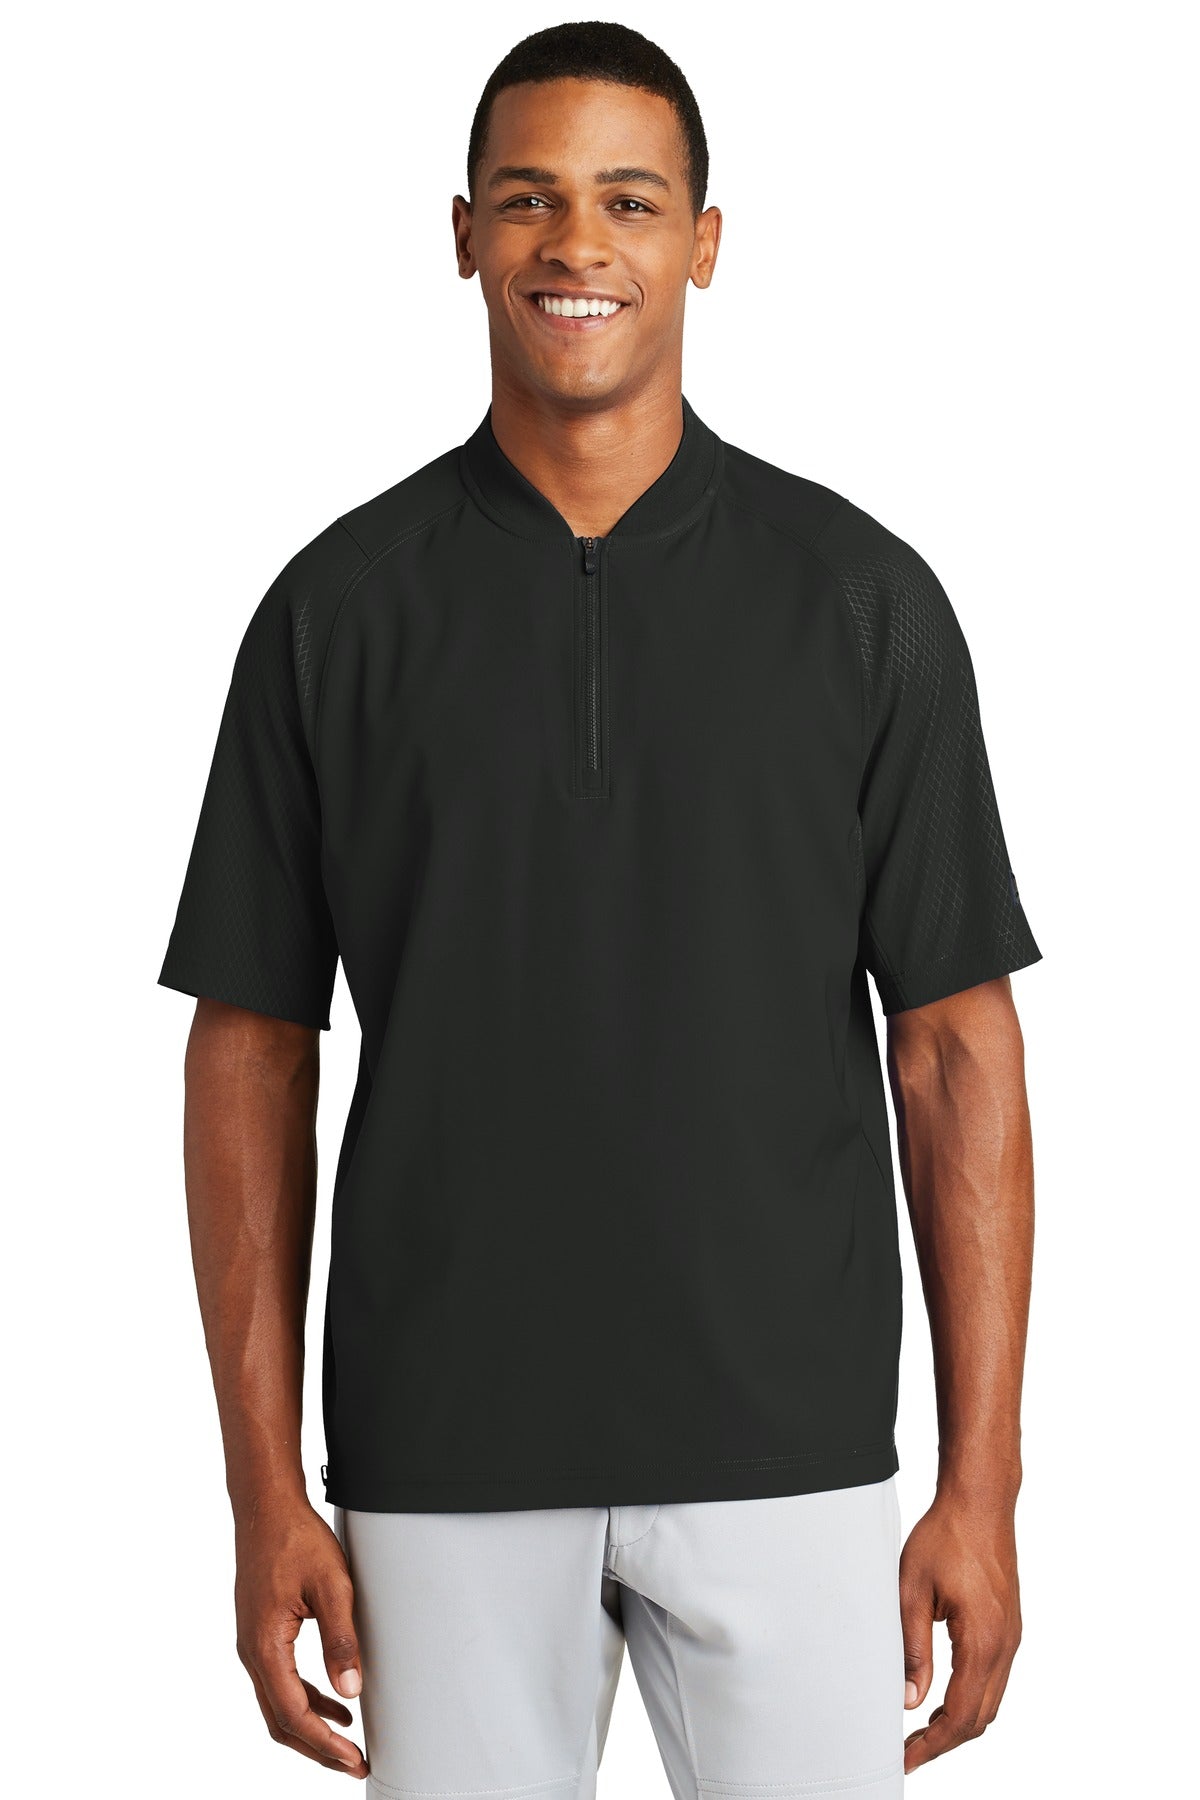 Burnsville Baseball Coaches - Black Short Sleeve 1/4-Zip Cage Jacket  (NEA600)